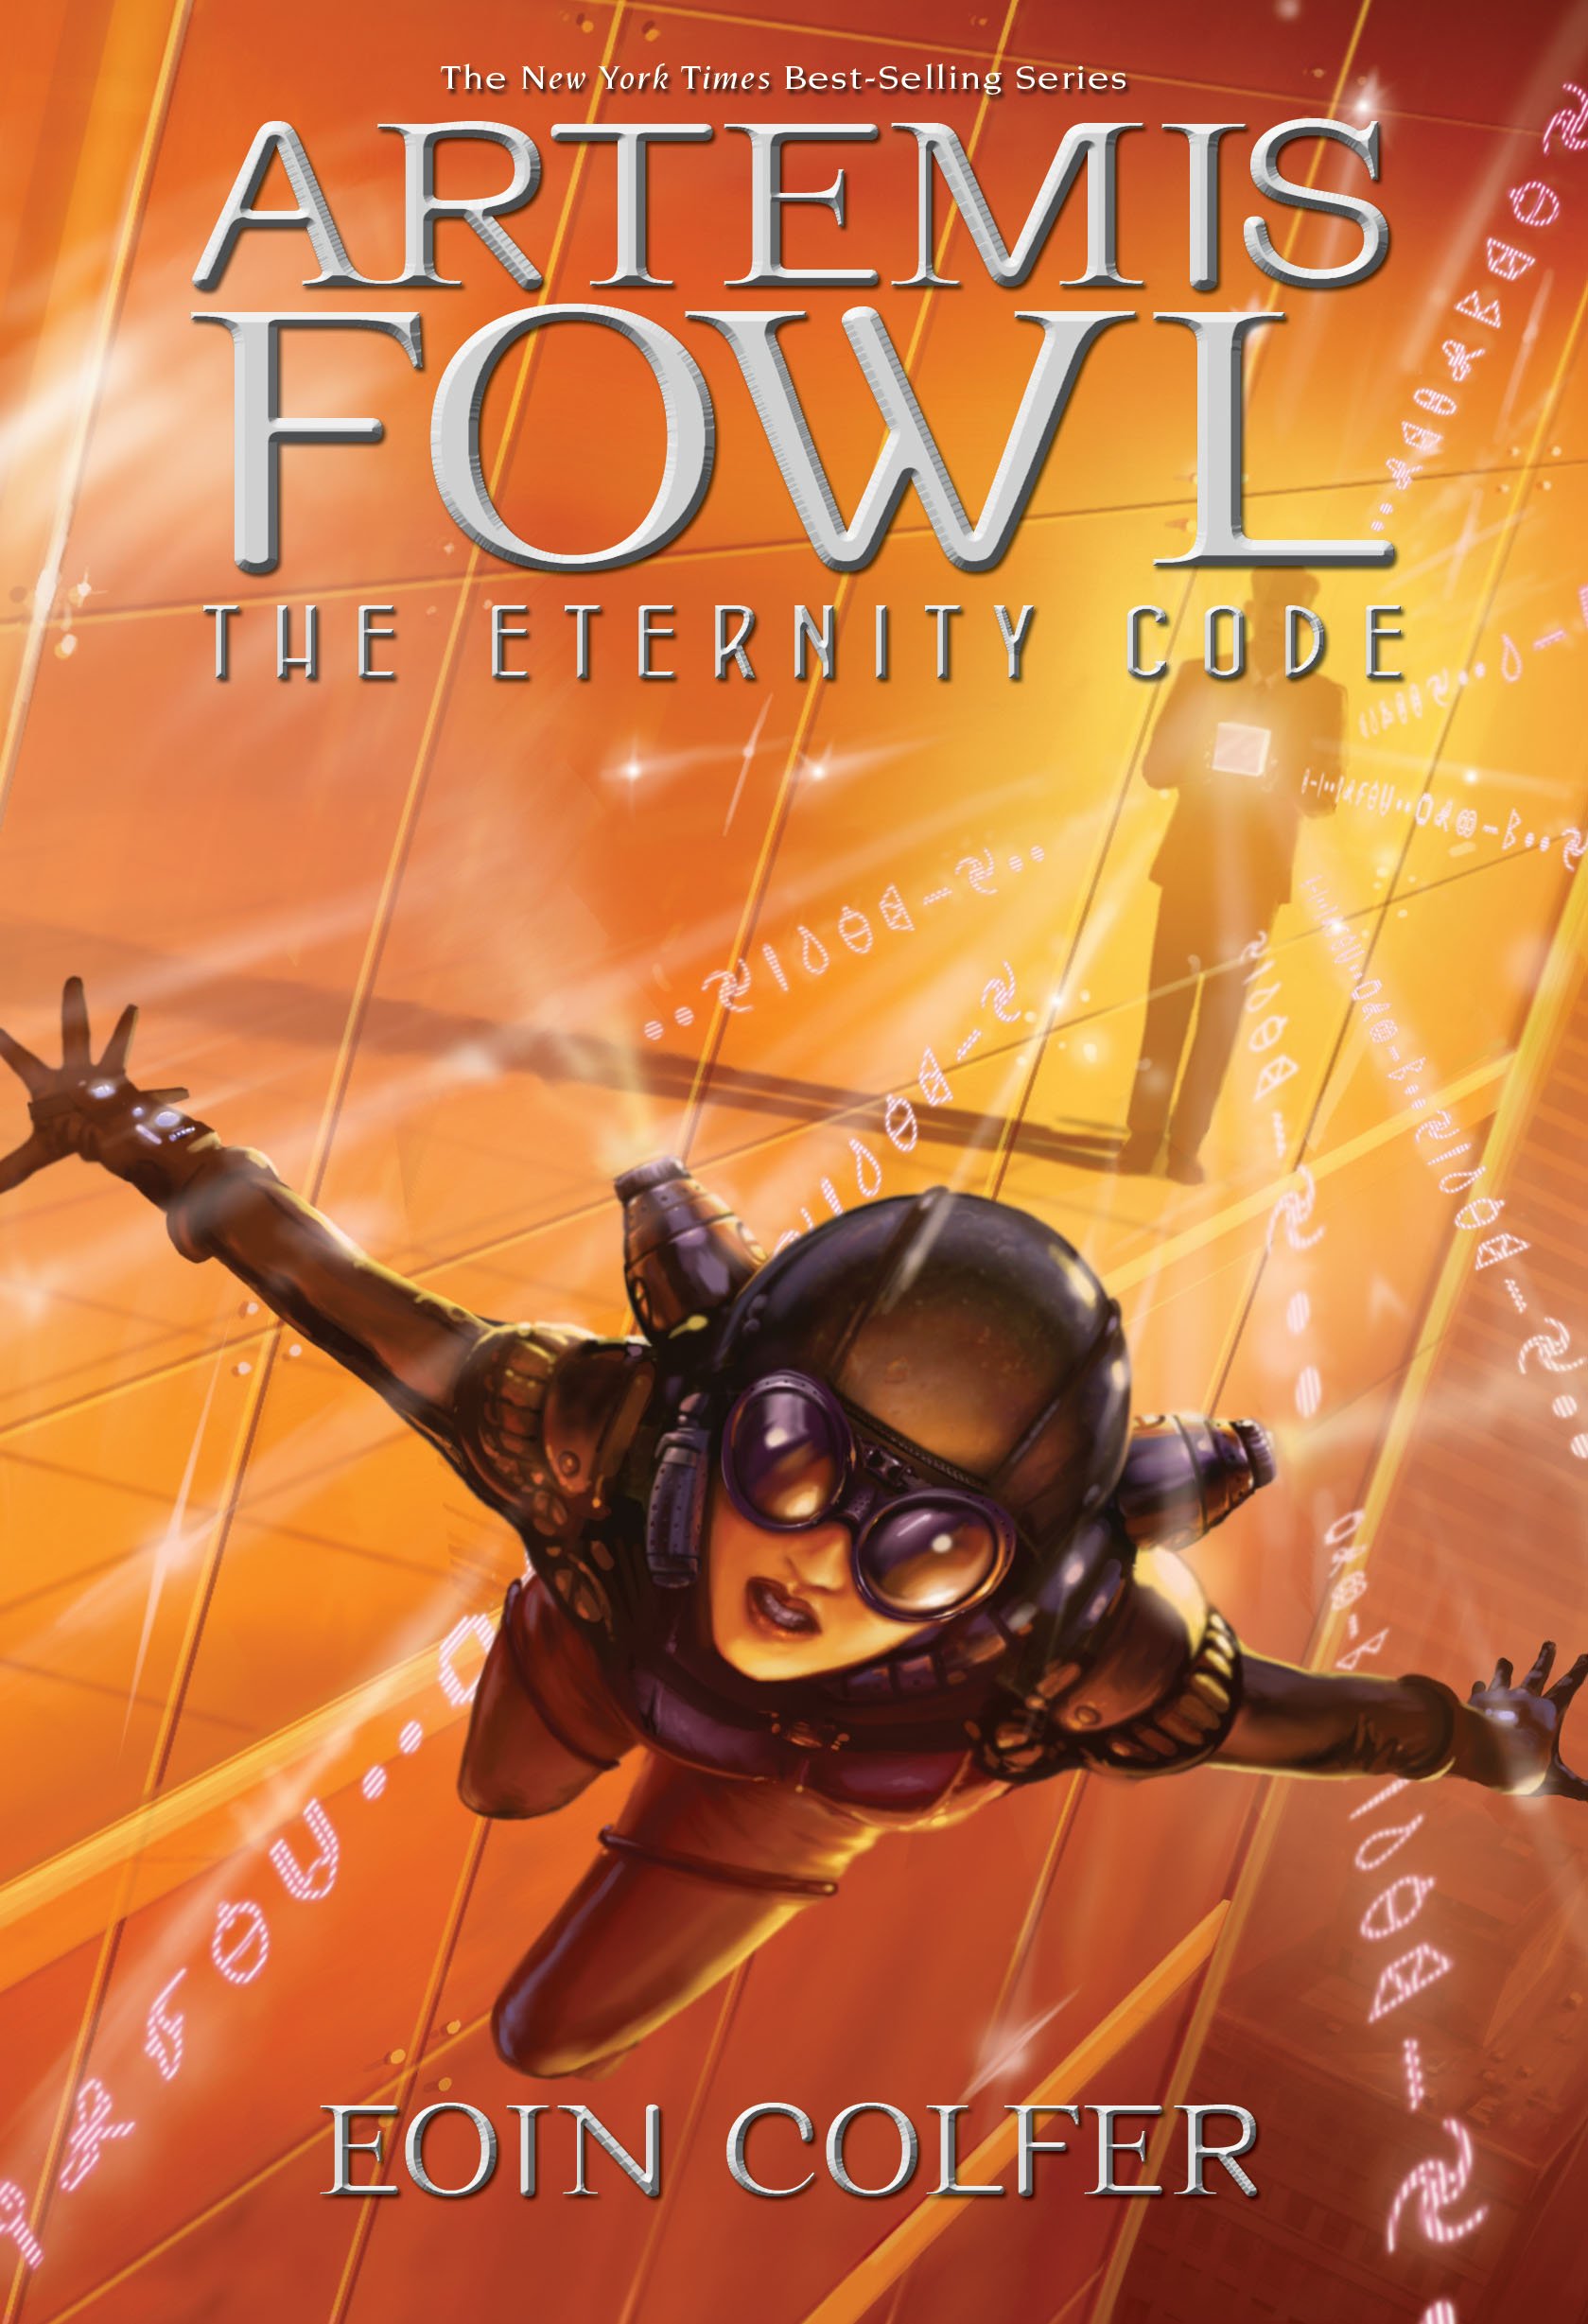 Artemis Fowl 3 audiobook: The Eternity Code